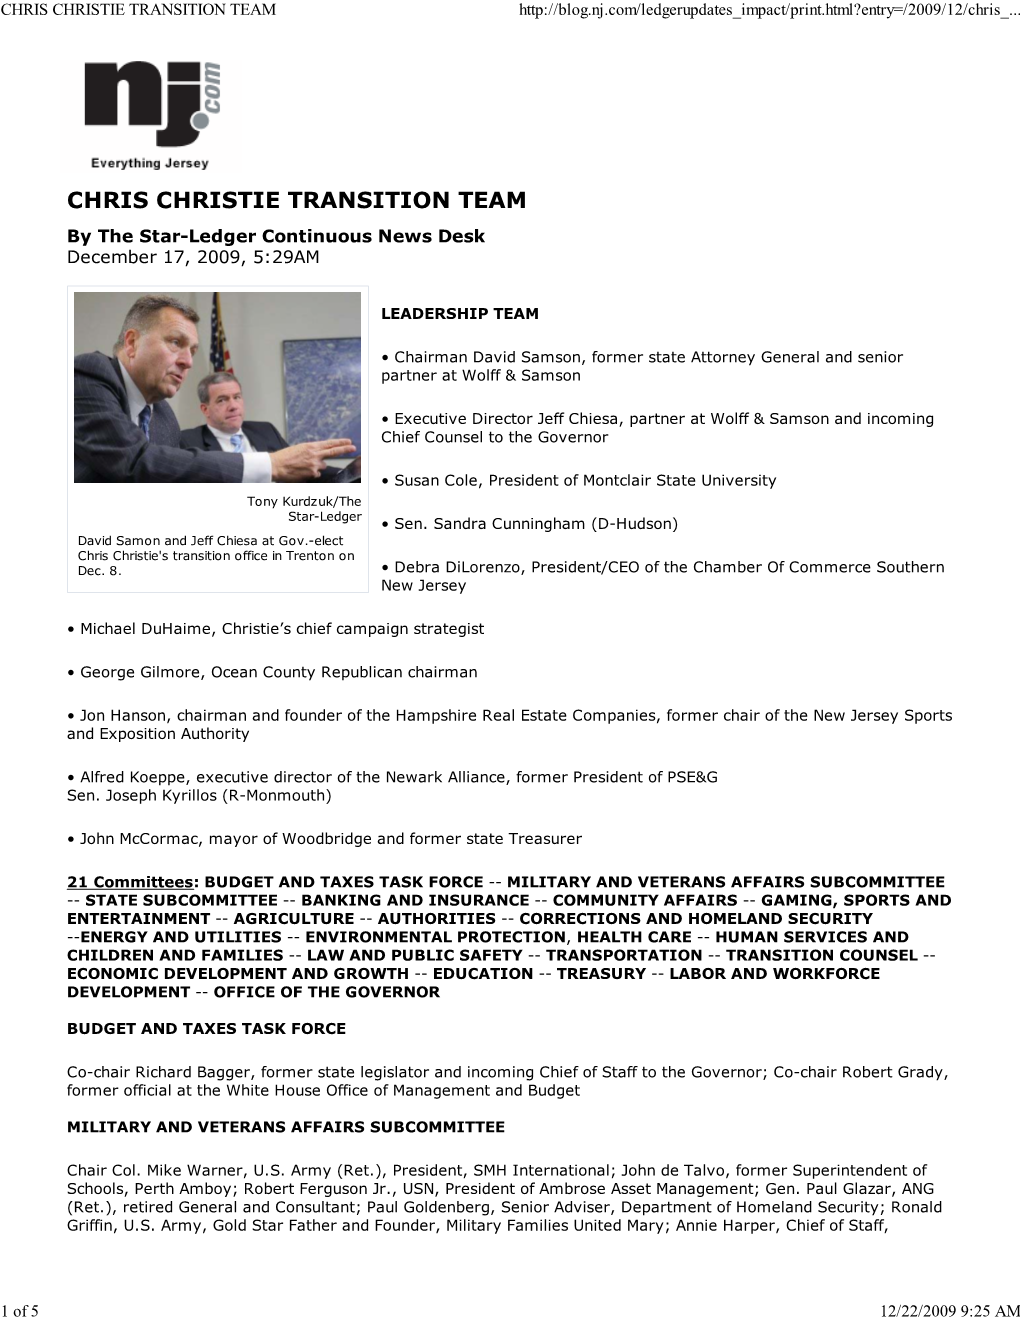 Chris Christie Transition Team